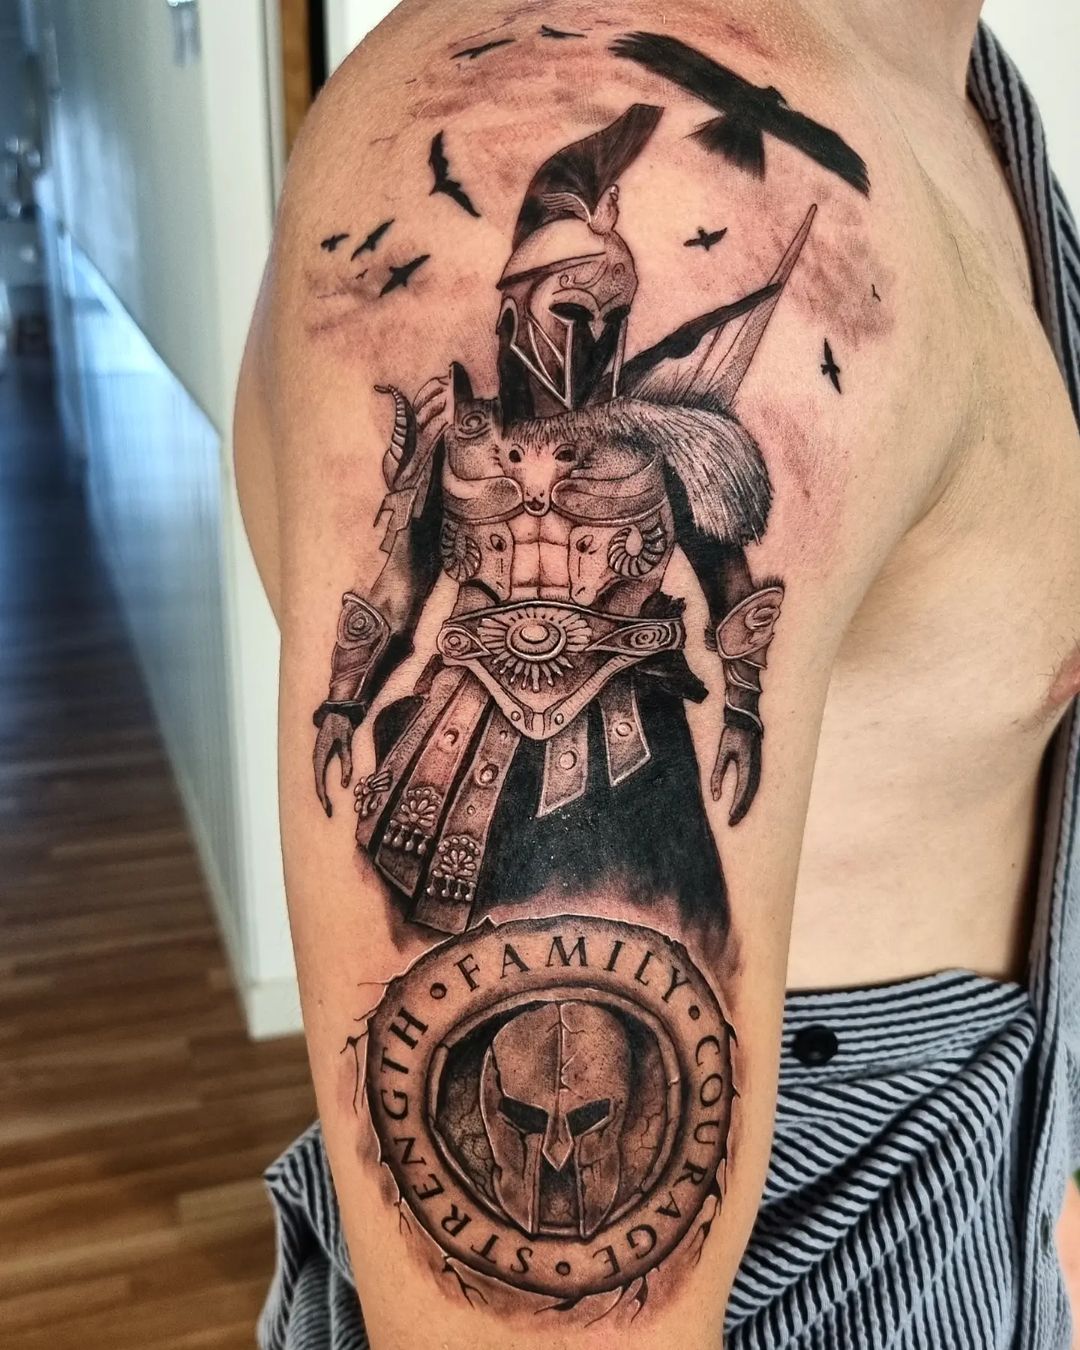 Spartan Tattoo by tattooeasy on DeviantArt